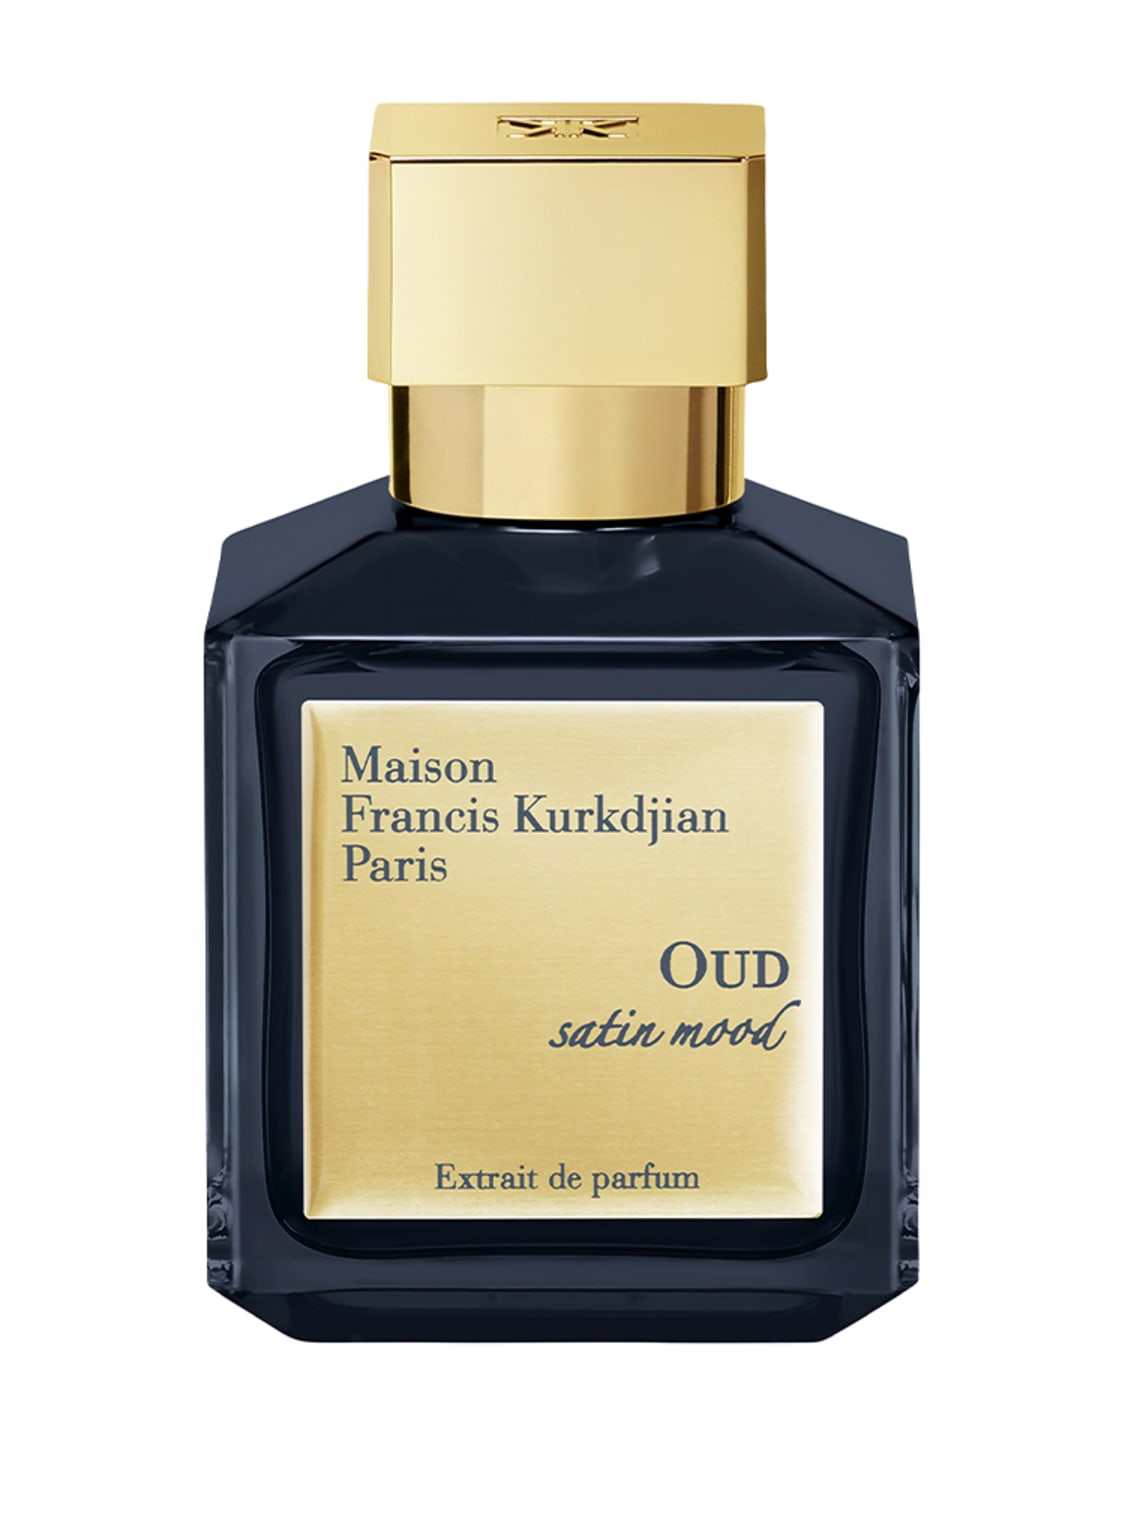 Maison Francis Kurkdjian Paris Oud Satin Mood Extrait de Parfum 70 ml von Maison Francis Kurkdjian Paris